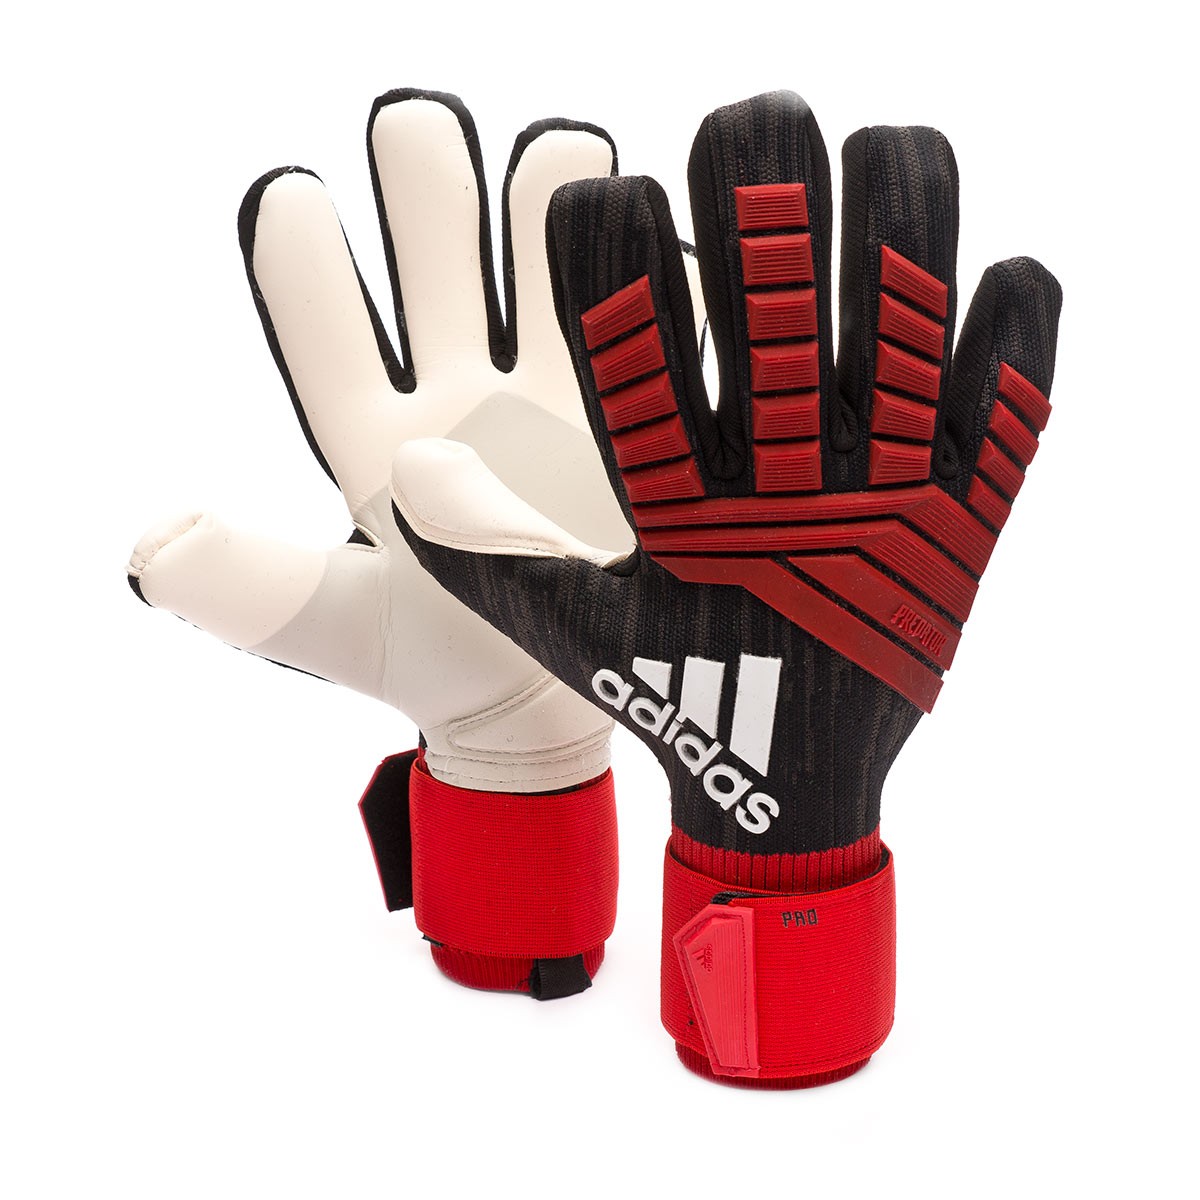 adidas predator pro gloves red and black